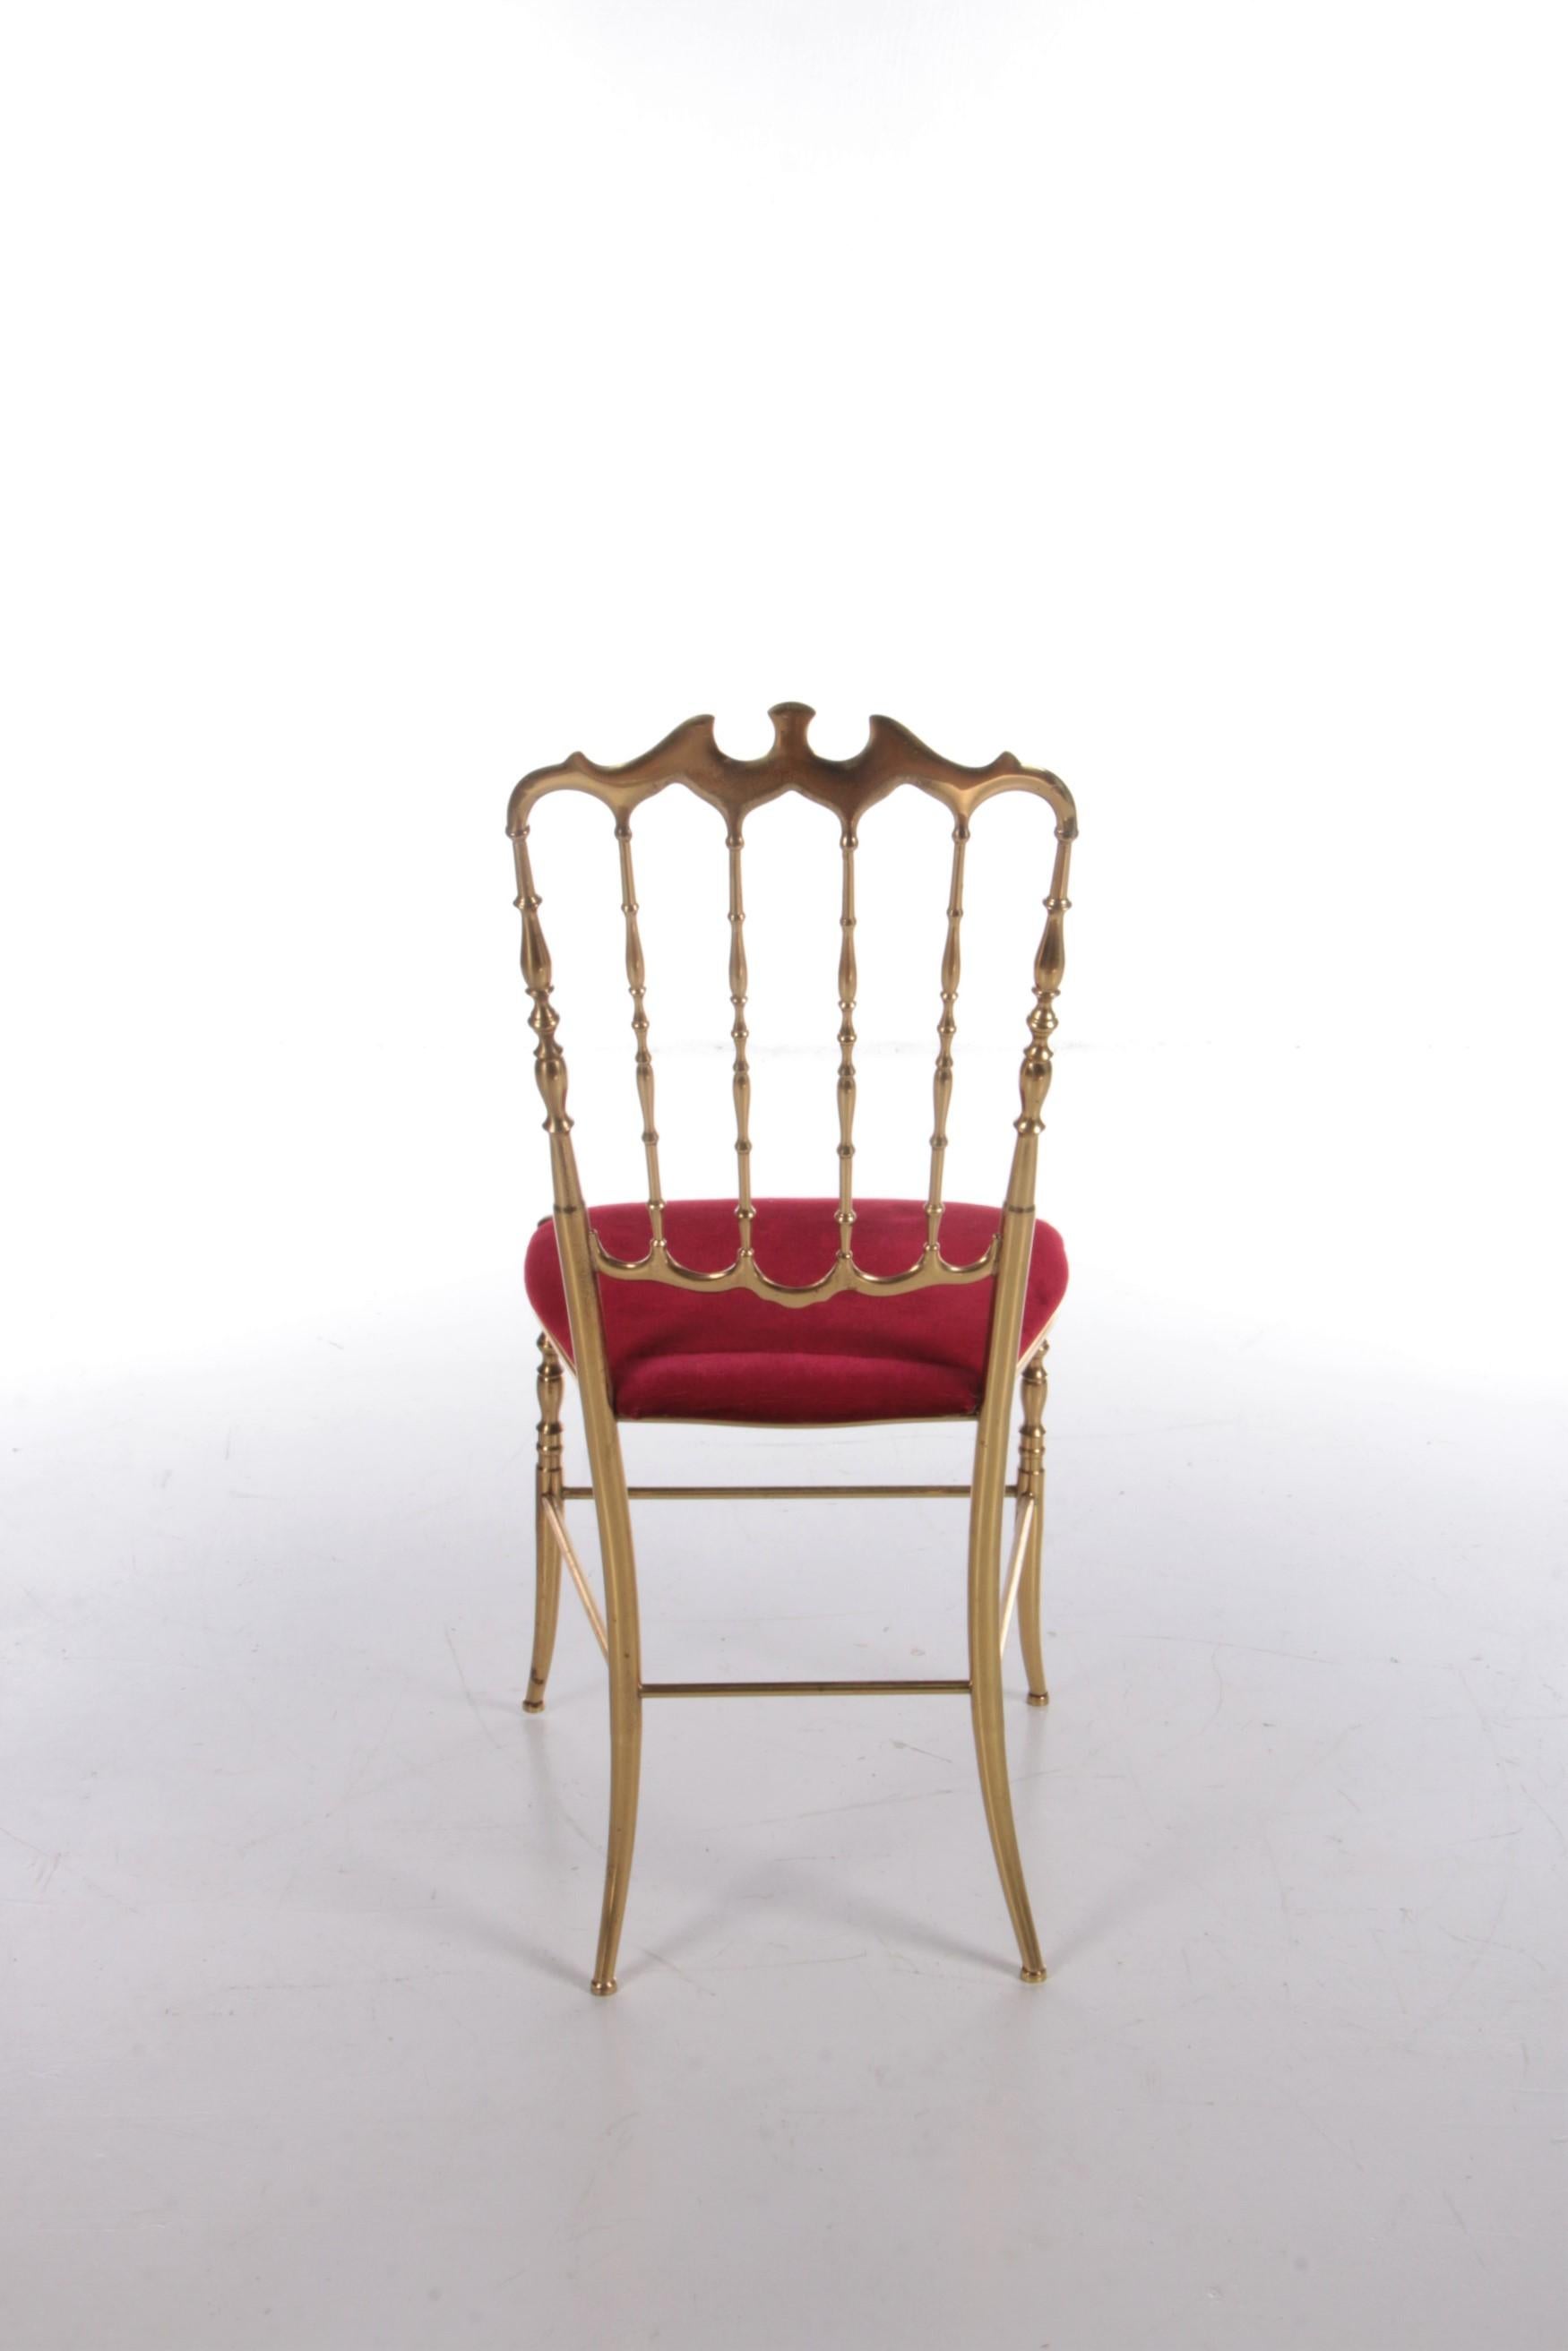 Mid-20th Century Italian Design Side Chair by Giuseppe Gaetano Descalzi for Chiavari, Italy 1950 For Sale